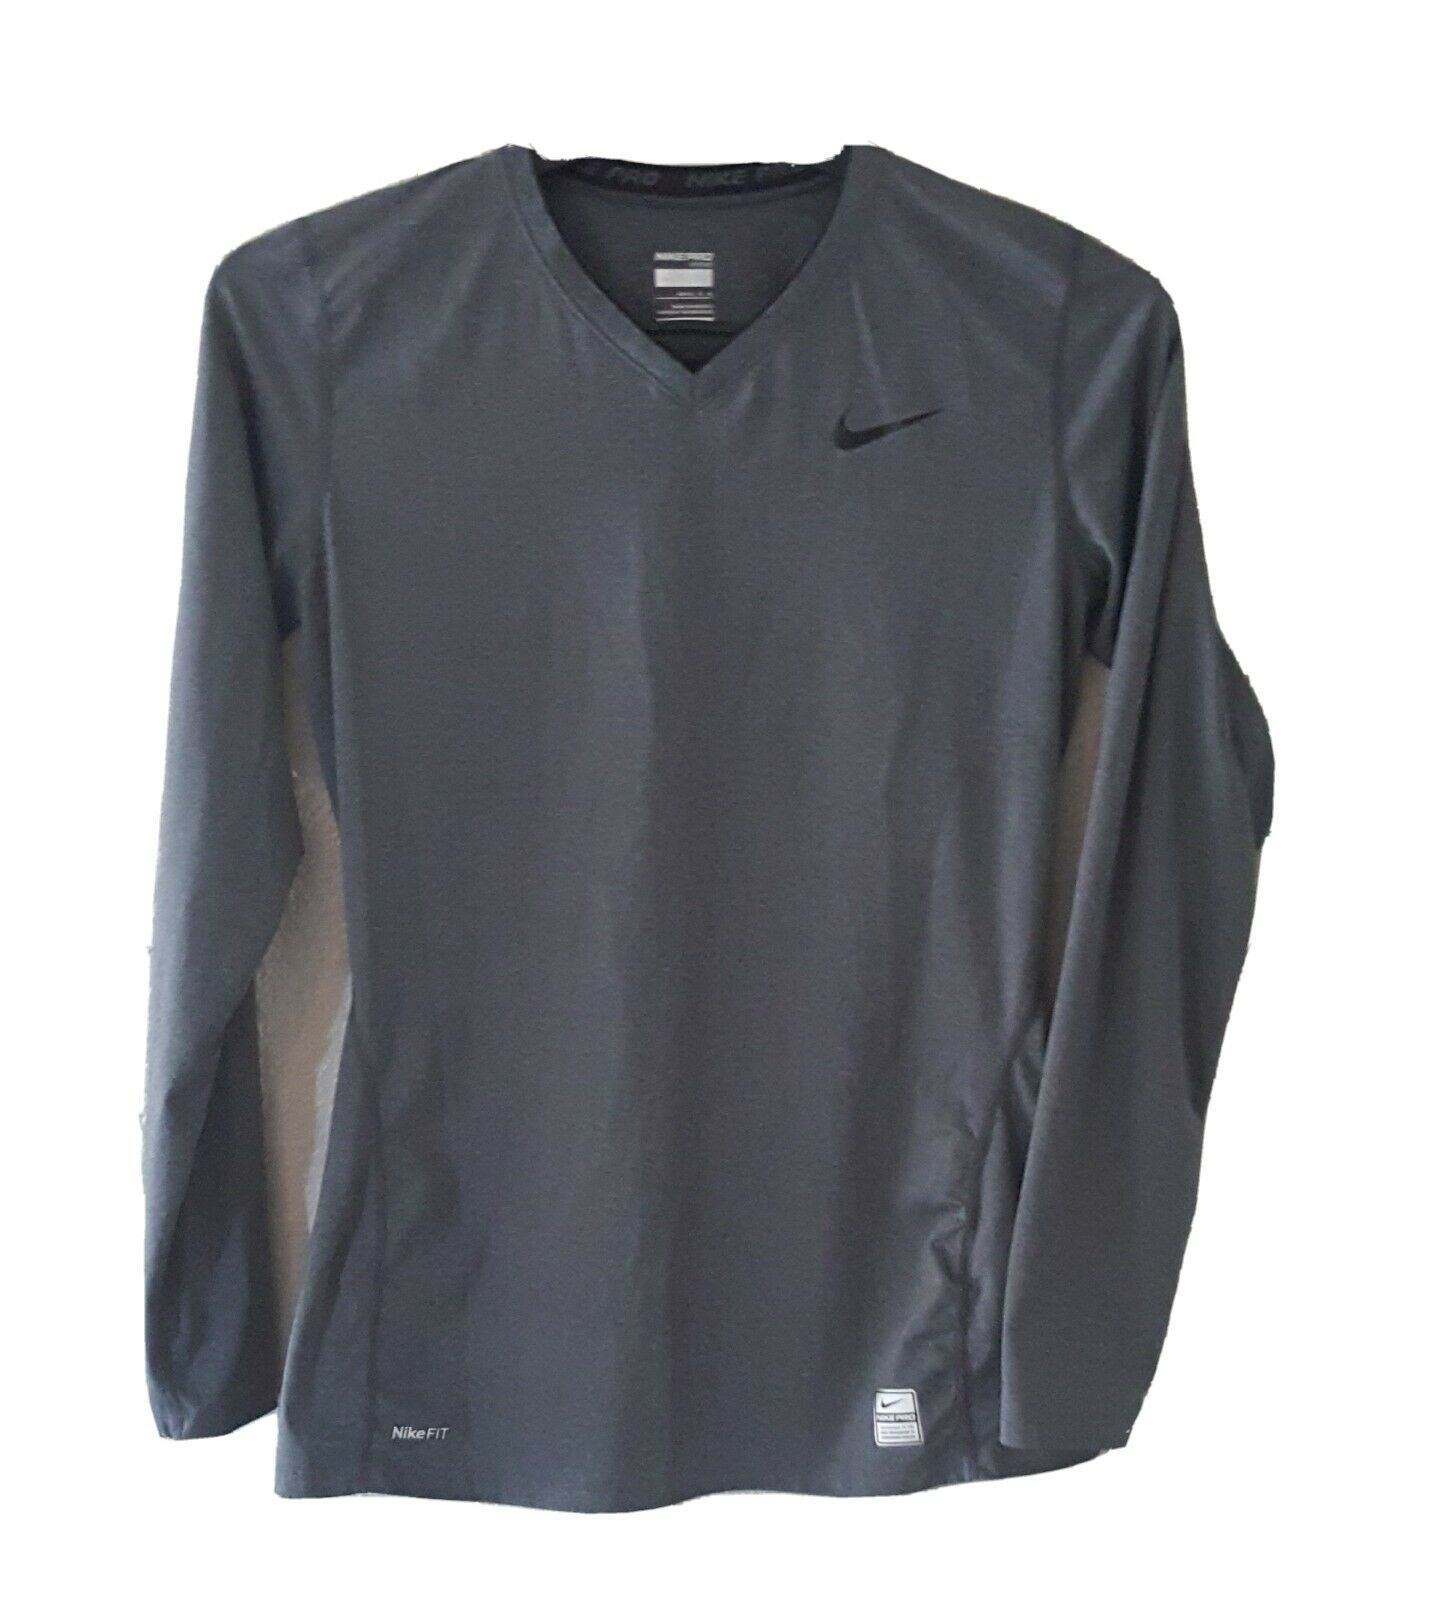 Nike Pro Dry Fit Women's Grey V-neck Long Sleeve Shirt sz M RN56323 ...